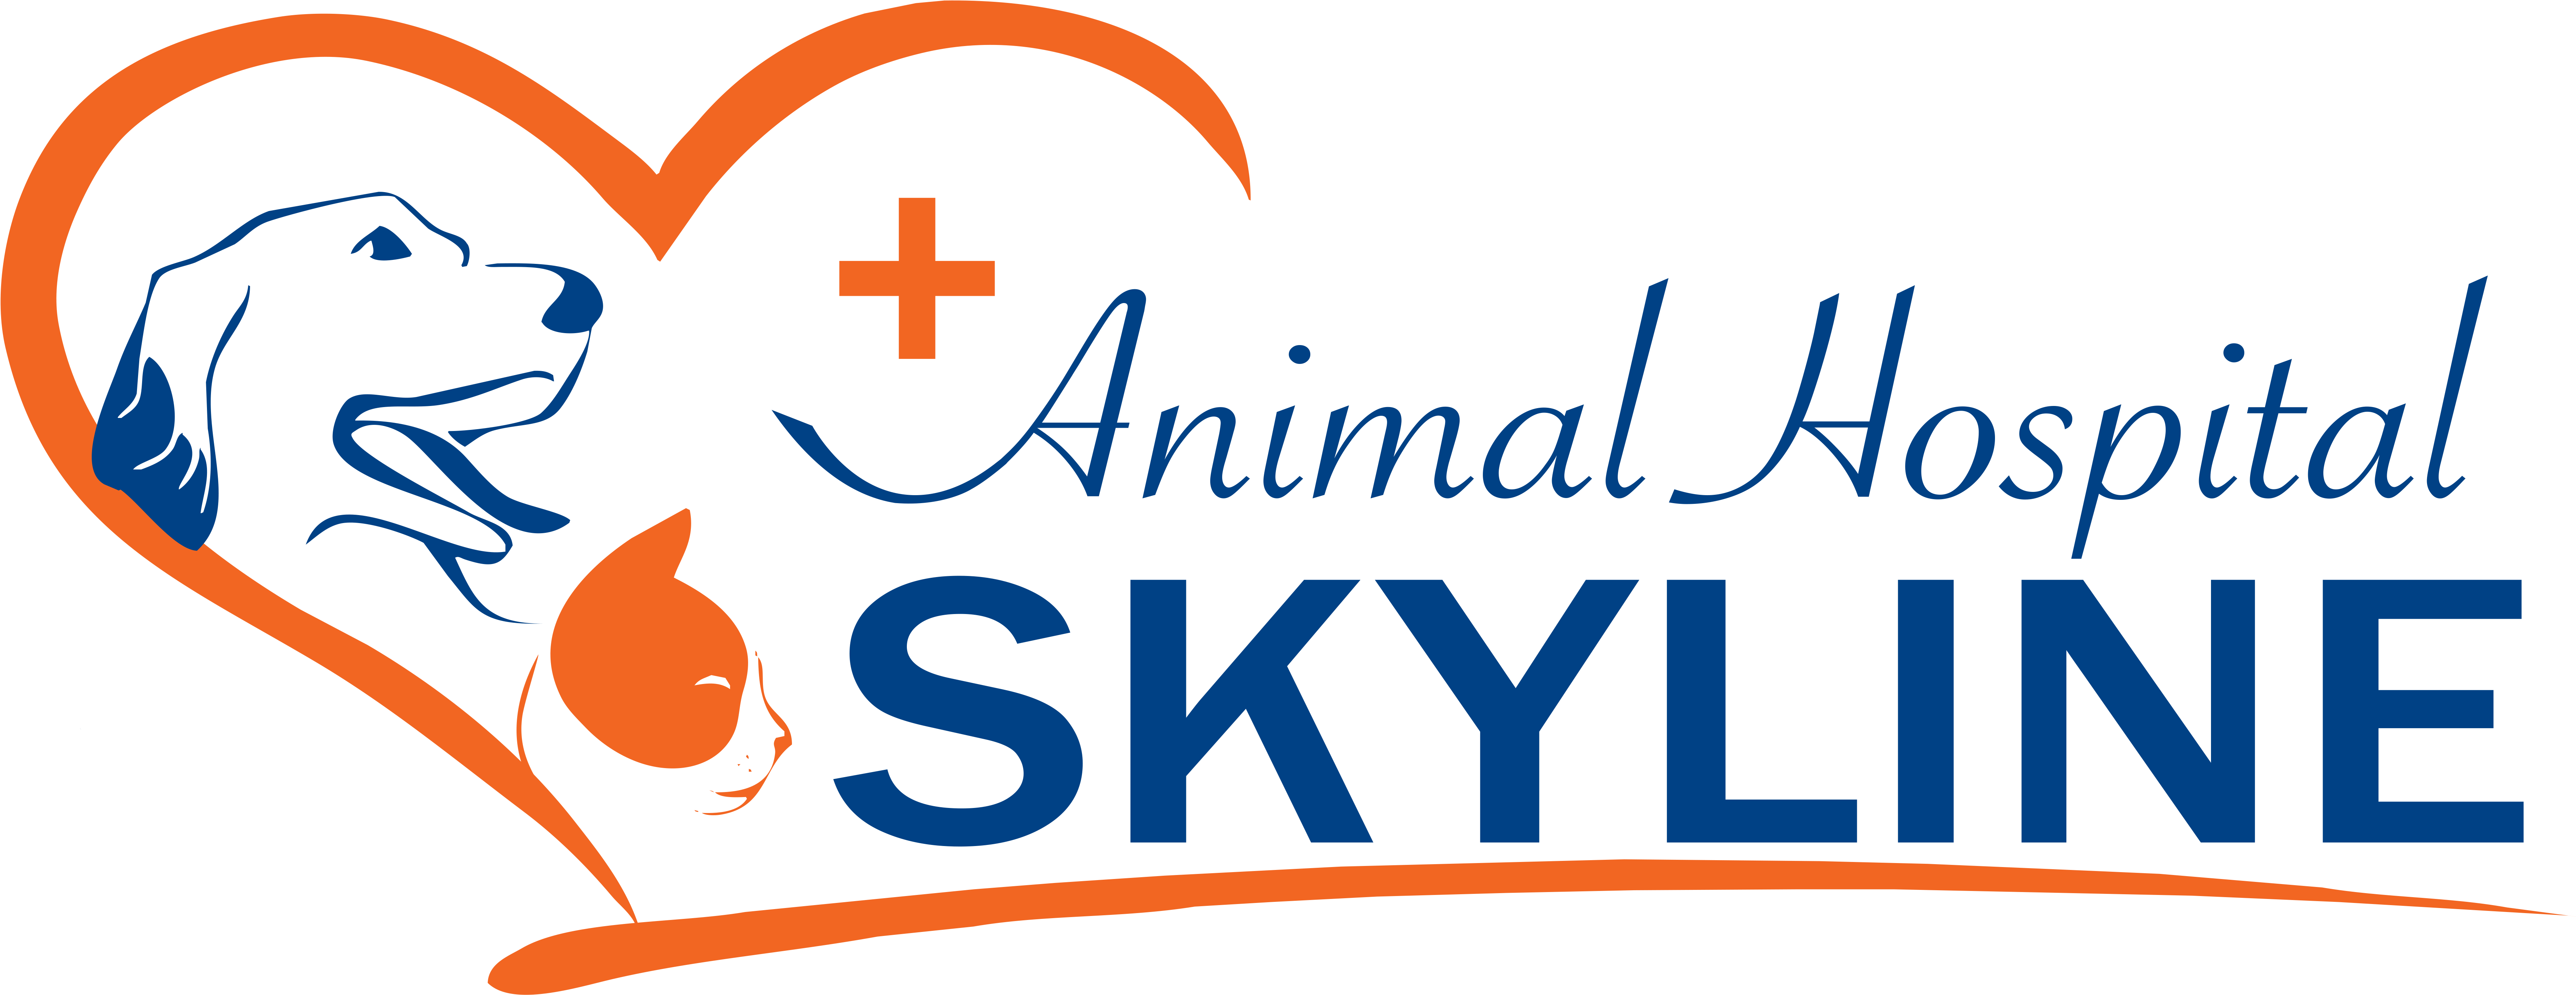 Skyline Animal Hospital (7124x2785)